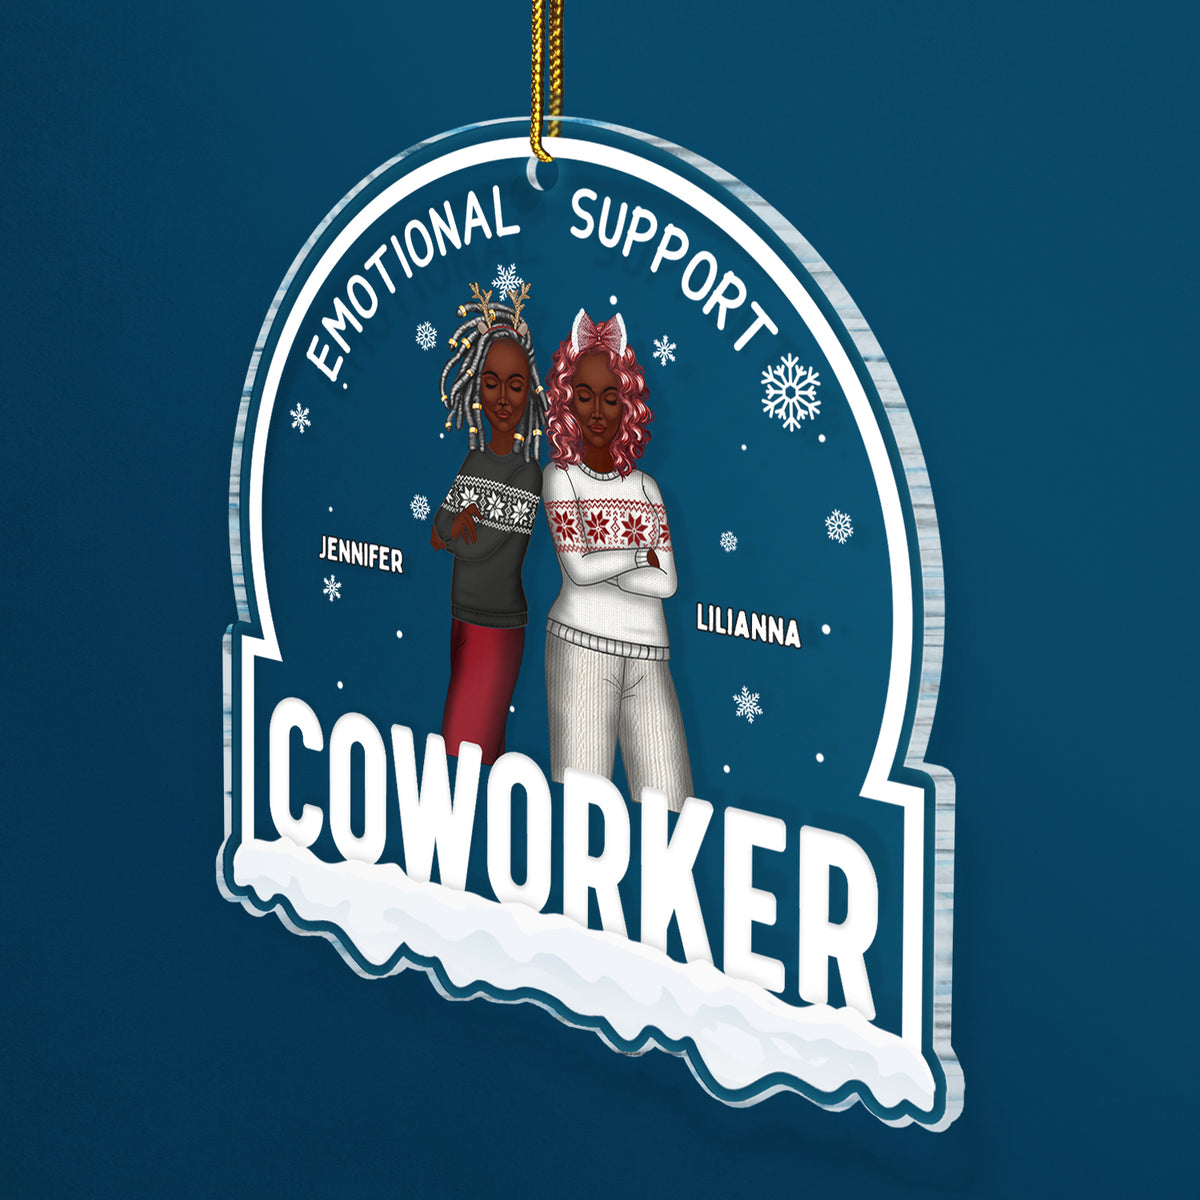 Emotional Support Coworker Vinyl Sticker, funny Coworker Gift, Coworke –  Neyastickershop